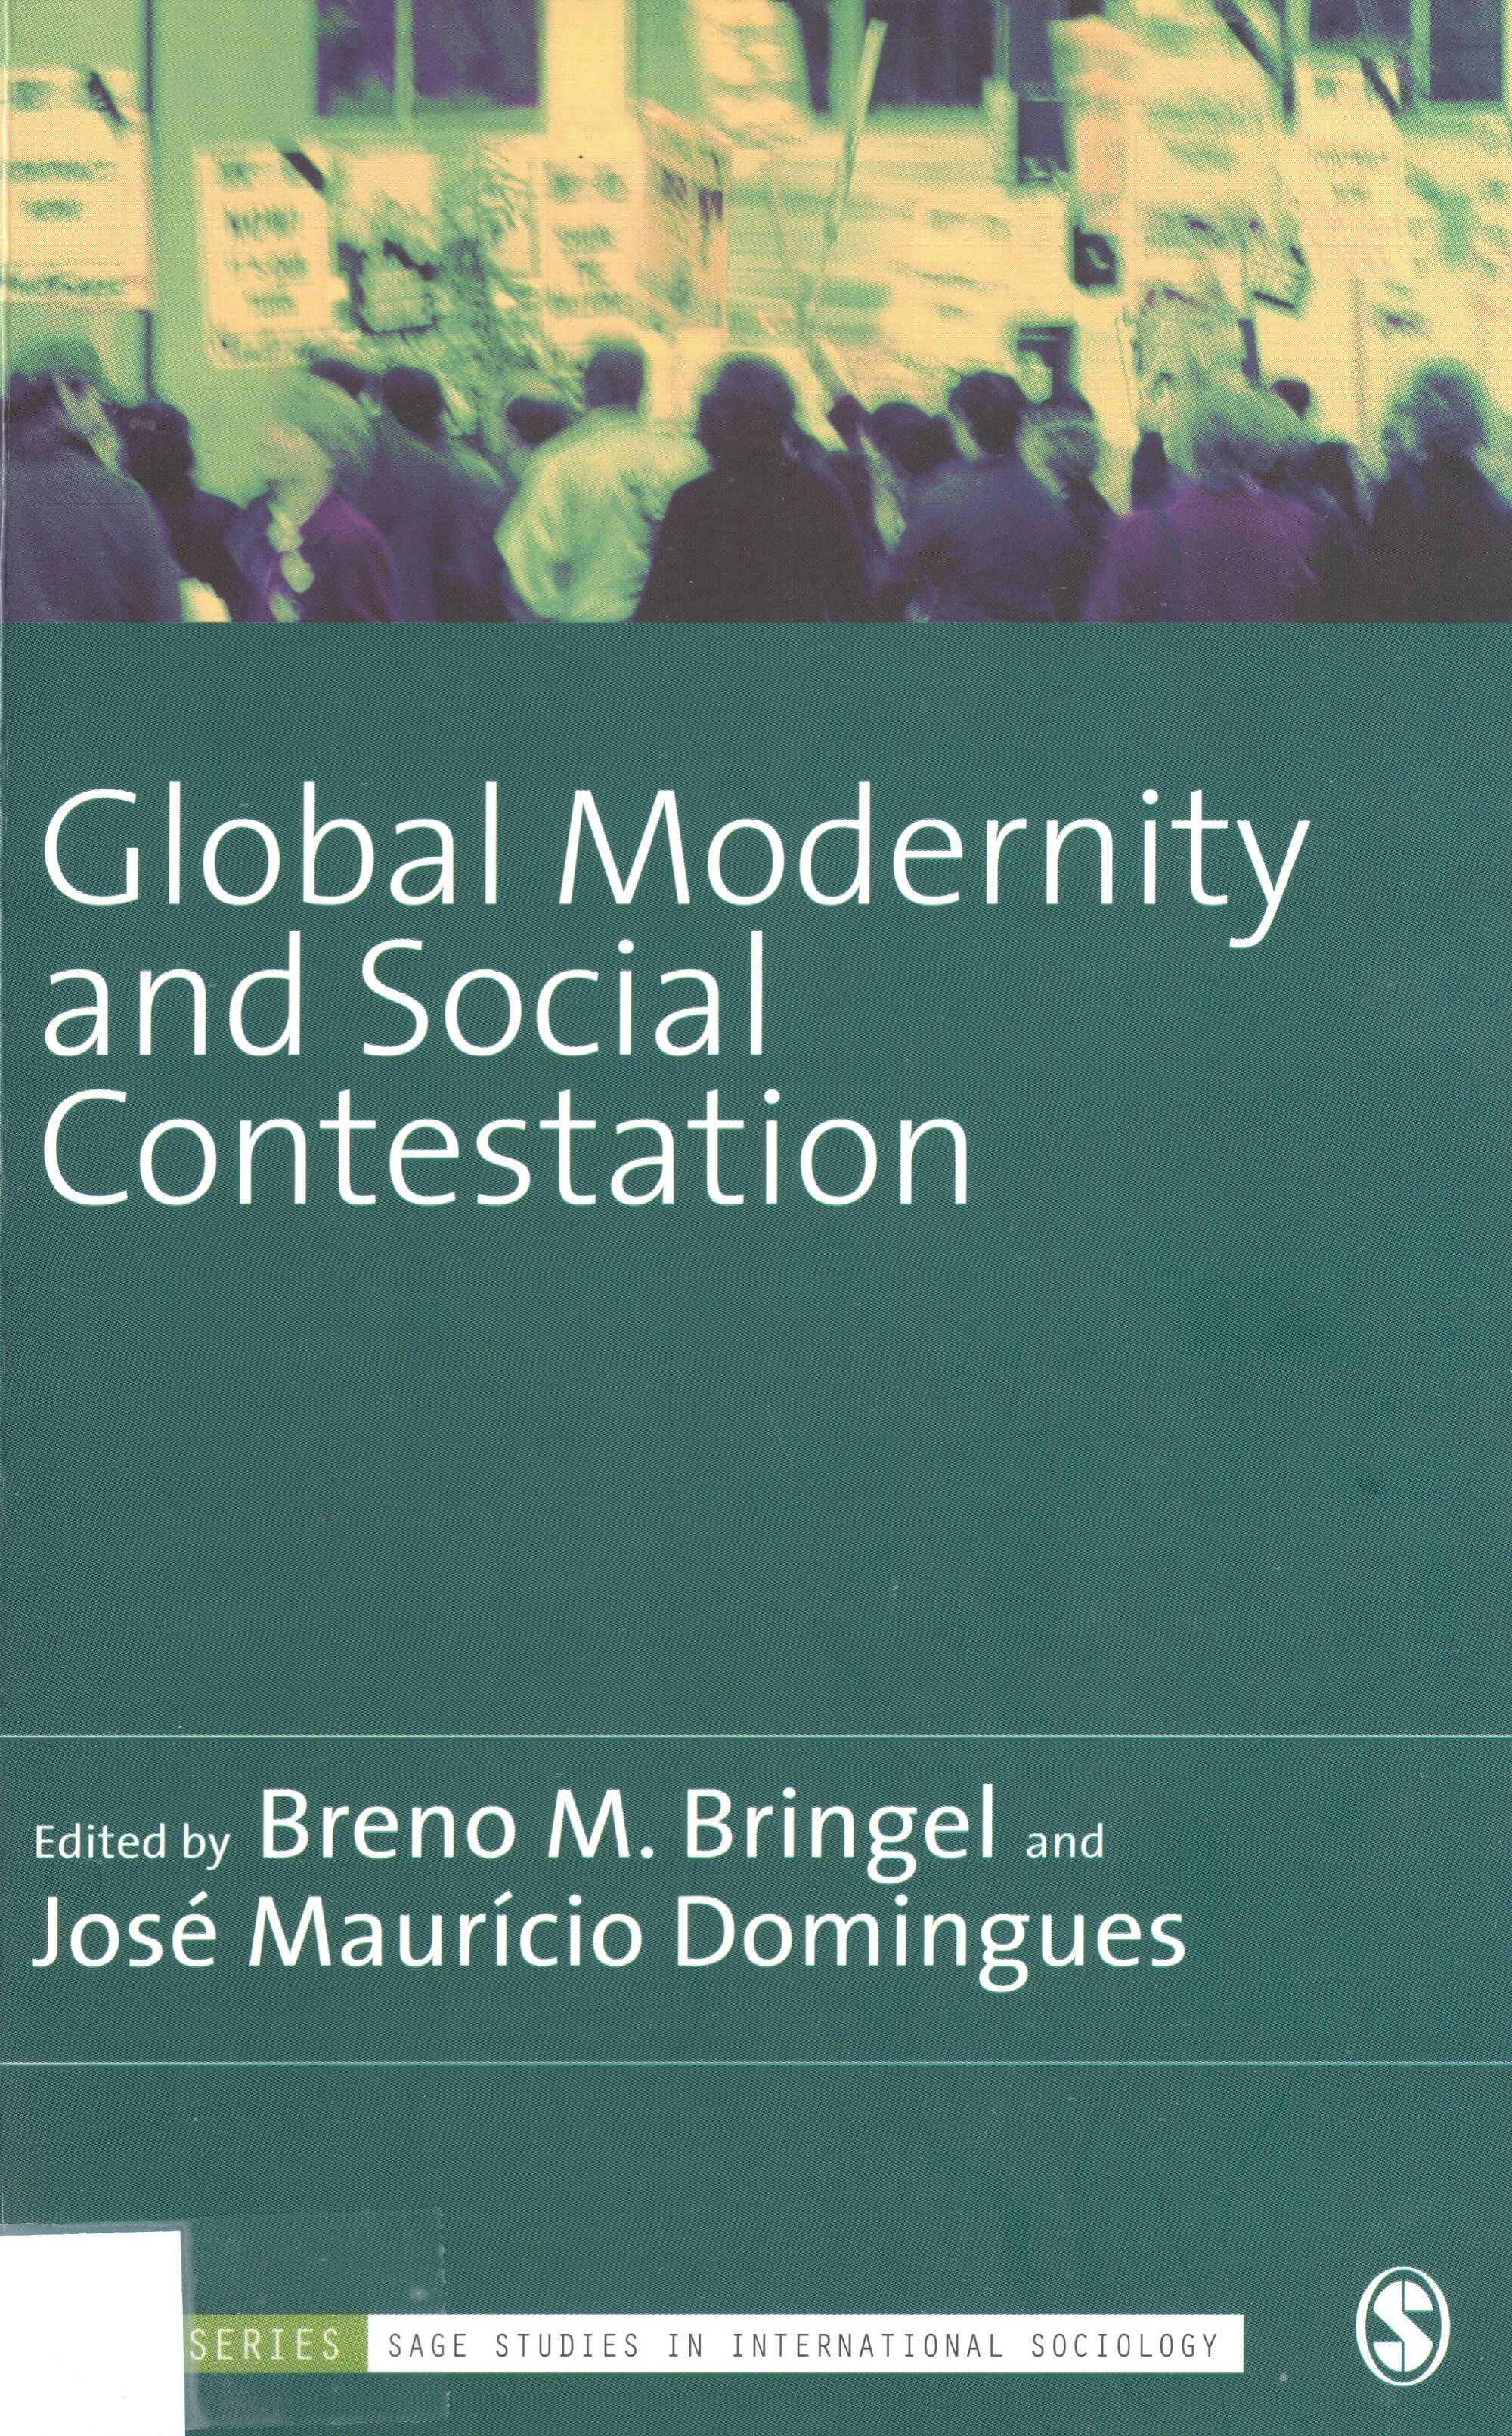 Imagen de portada del libro Global modernity and social contestation